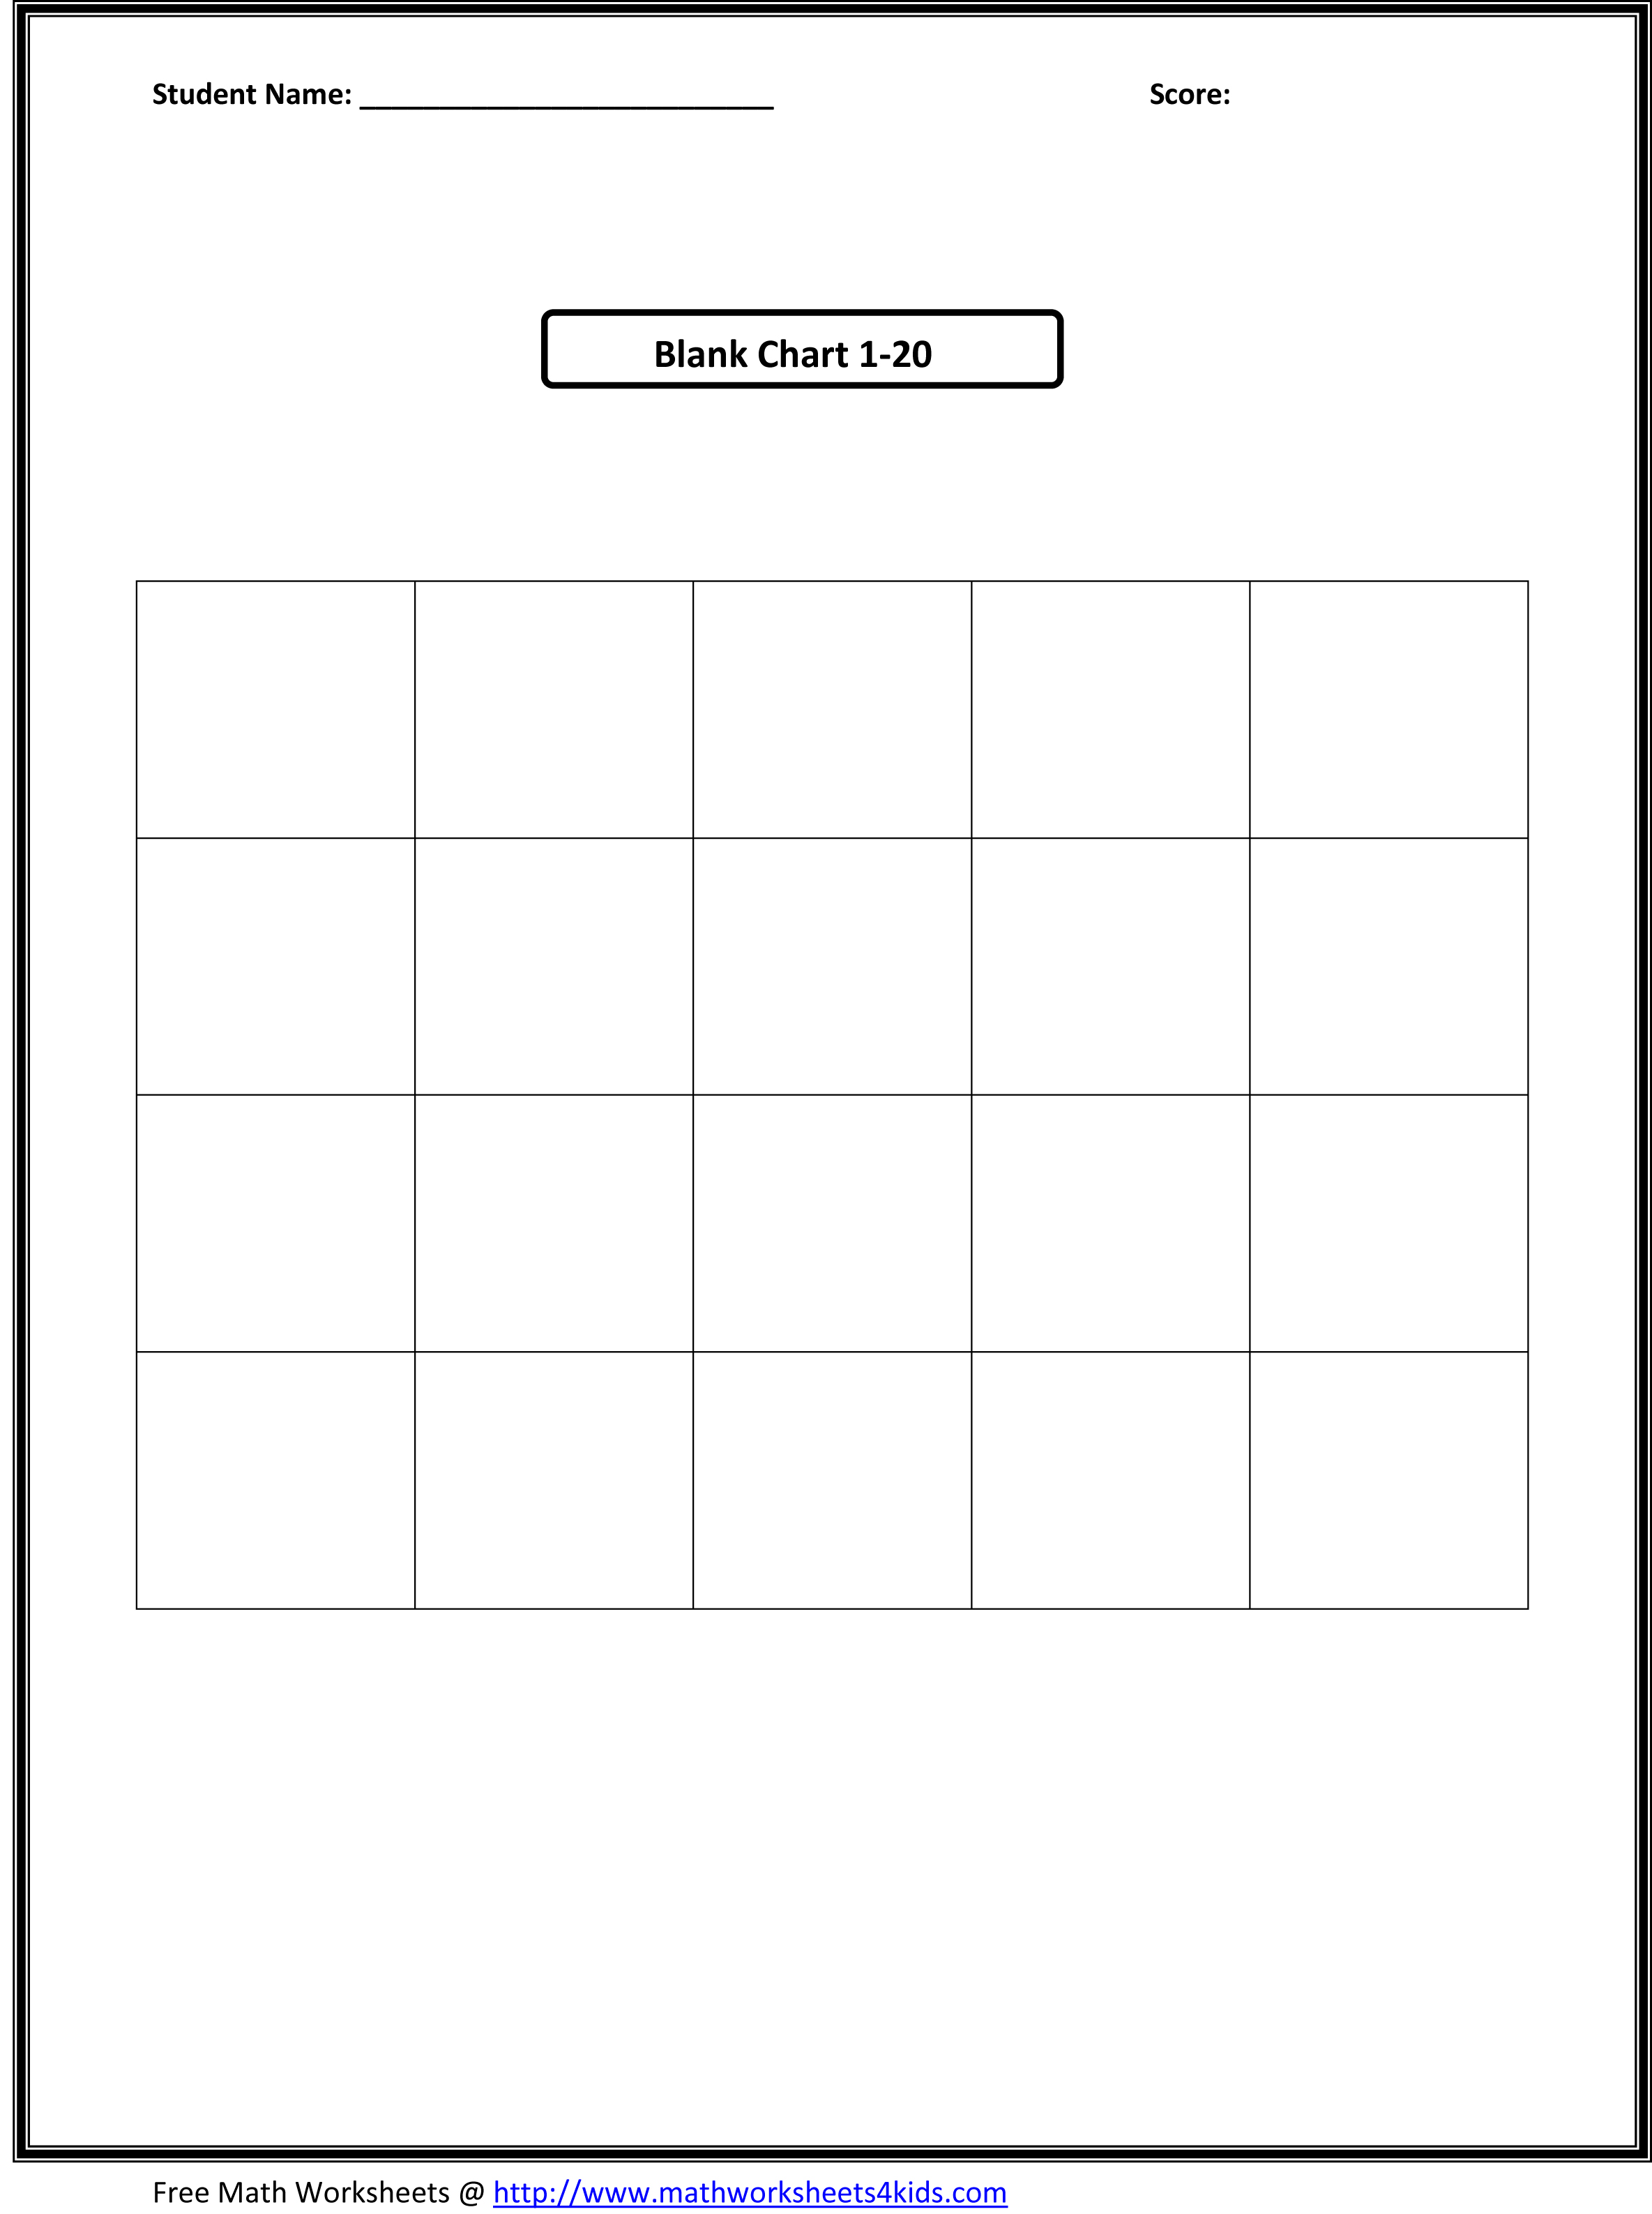 Blank Number Line Worksheet